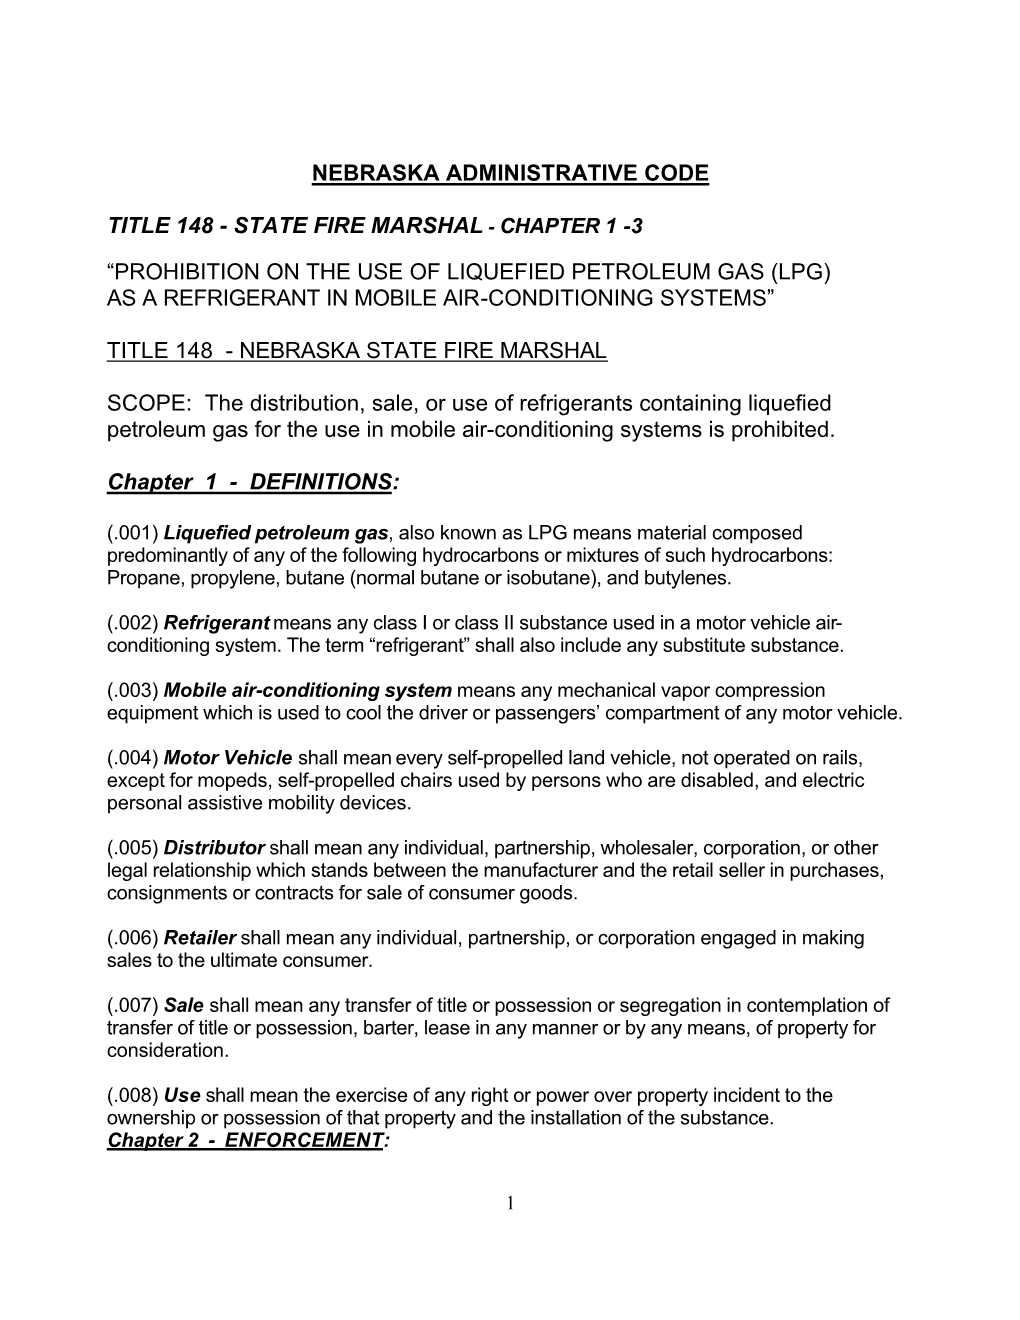 Nebraska Administrative Code Title